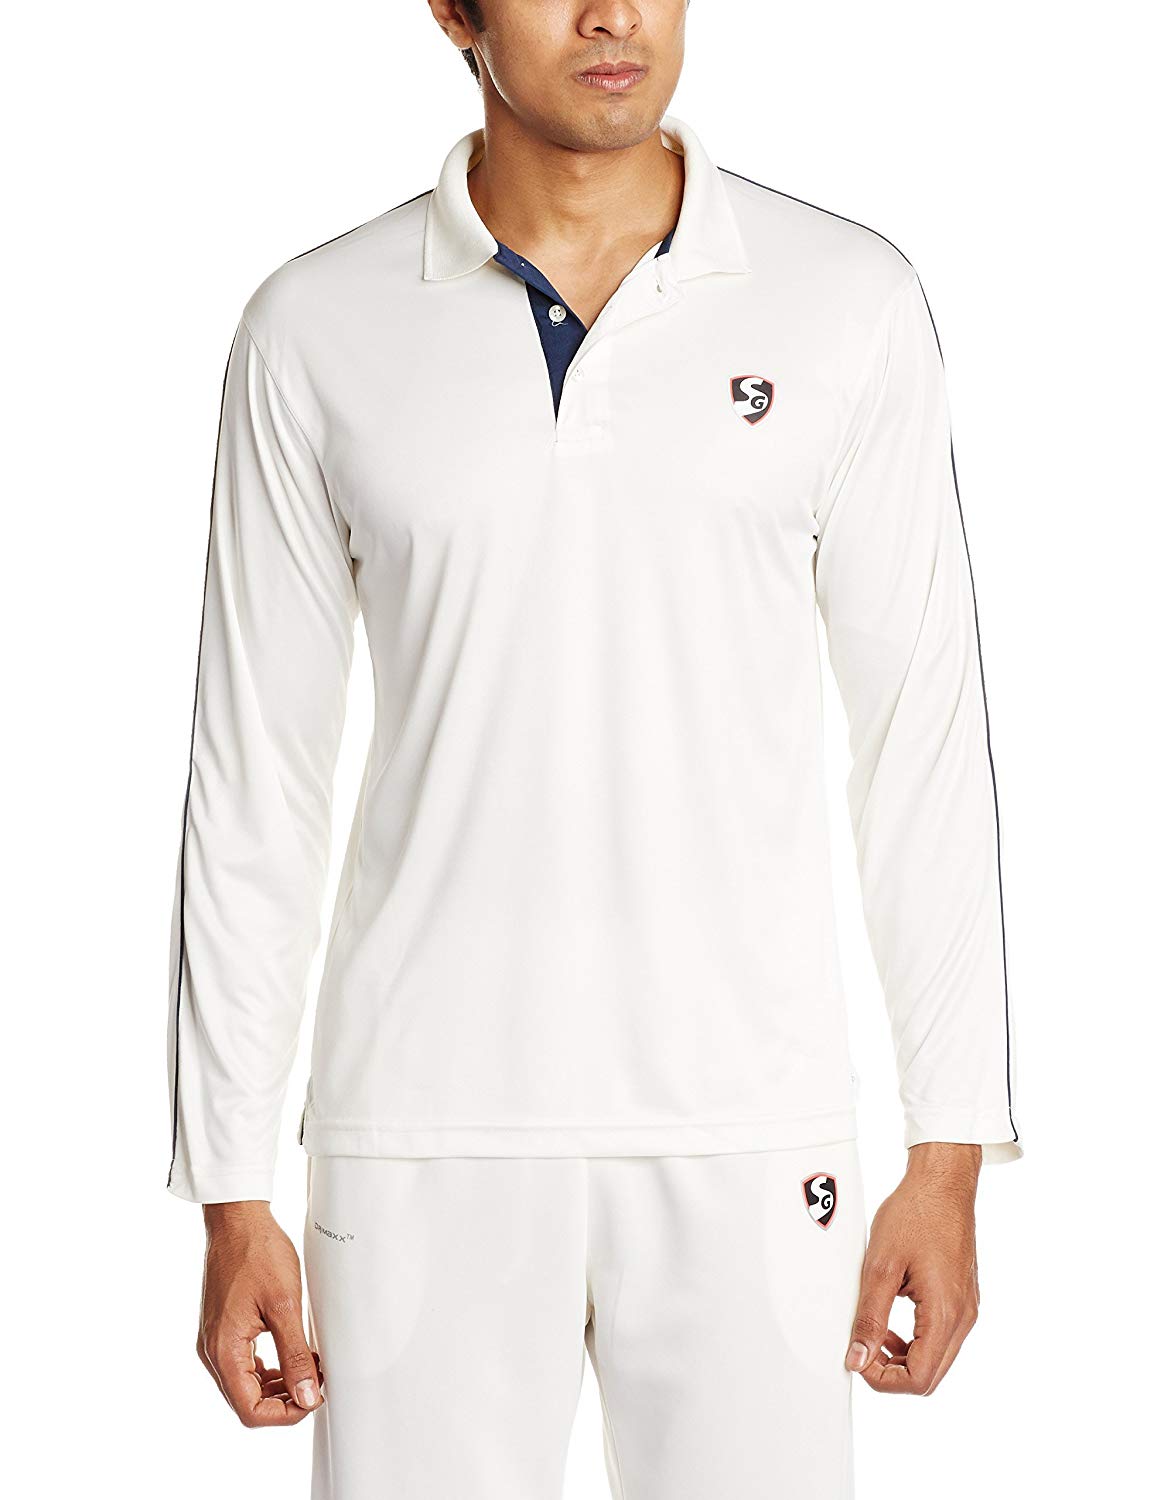 SG Century Full Sleeves Cricket Shirt (White) - Best Price online Prokicksports.com